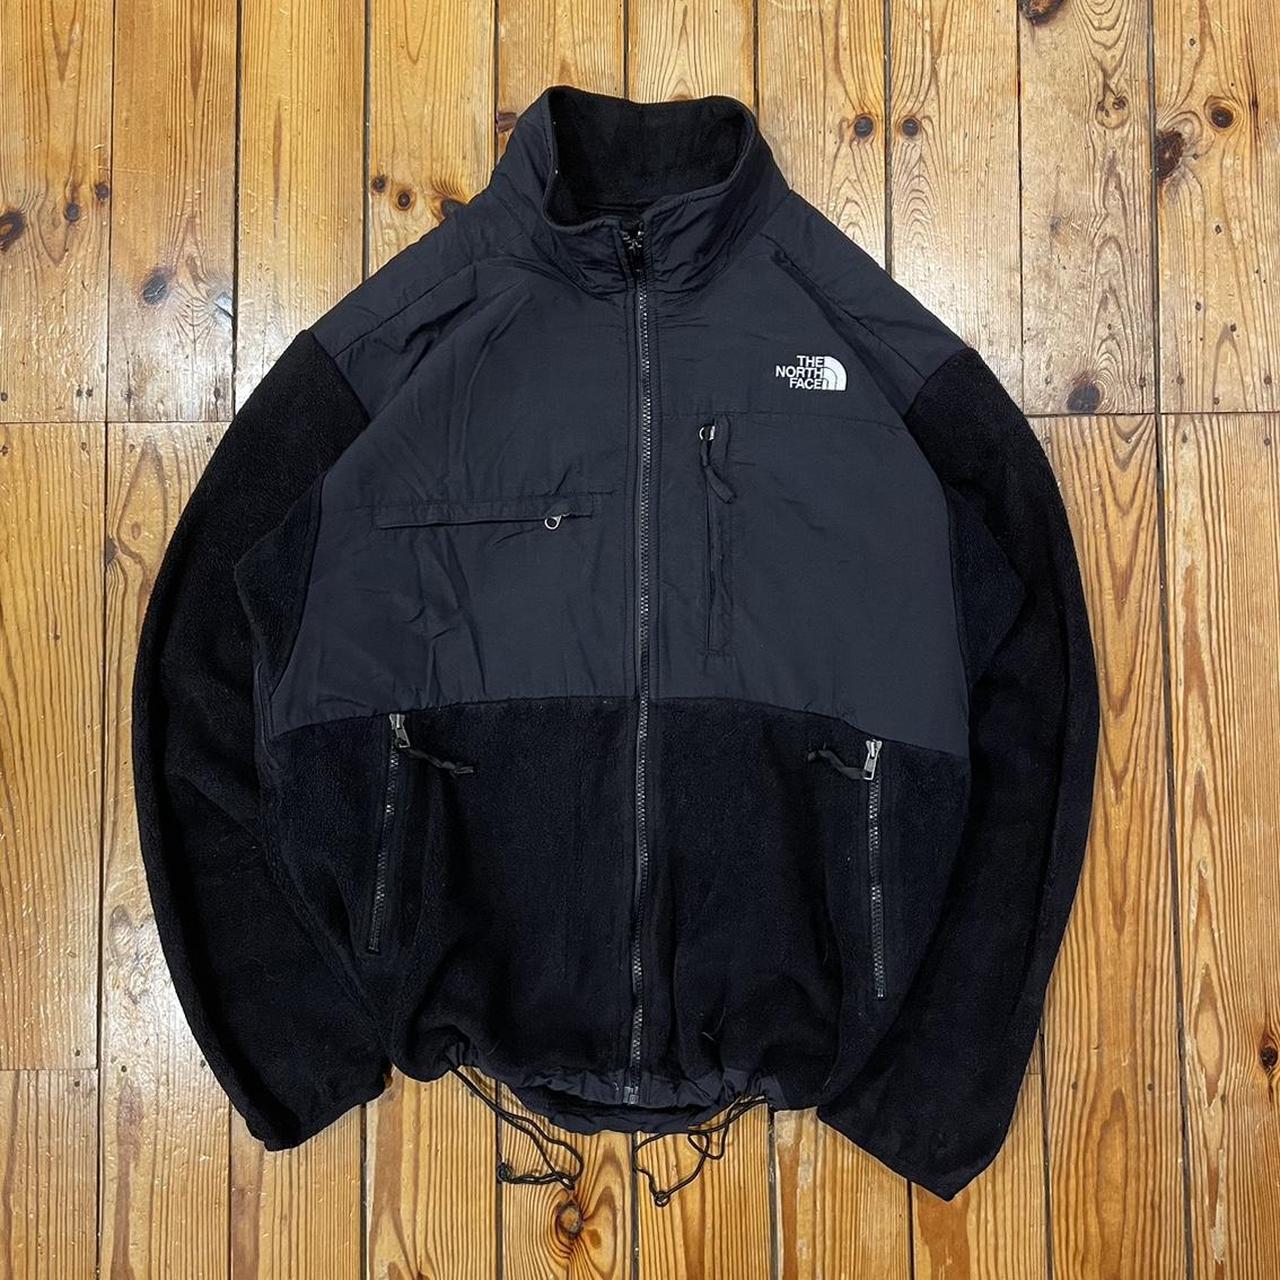 Vintage 2000s The North Face Denali fleece jacket... - Depop